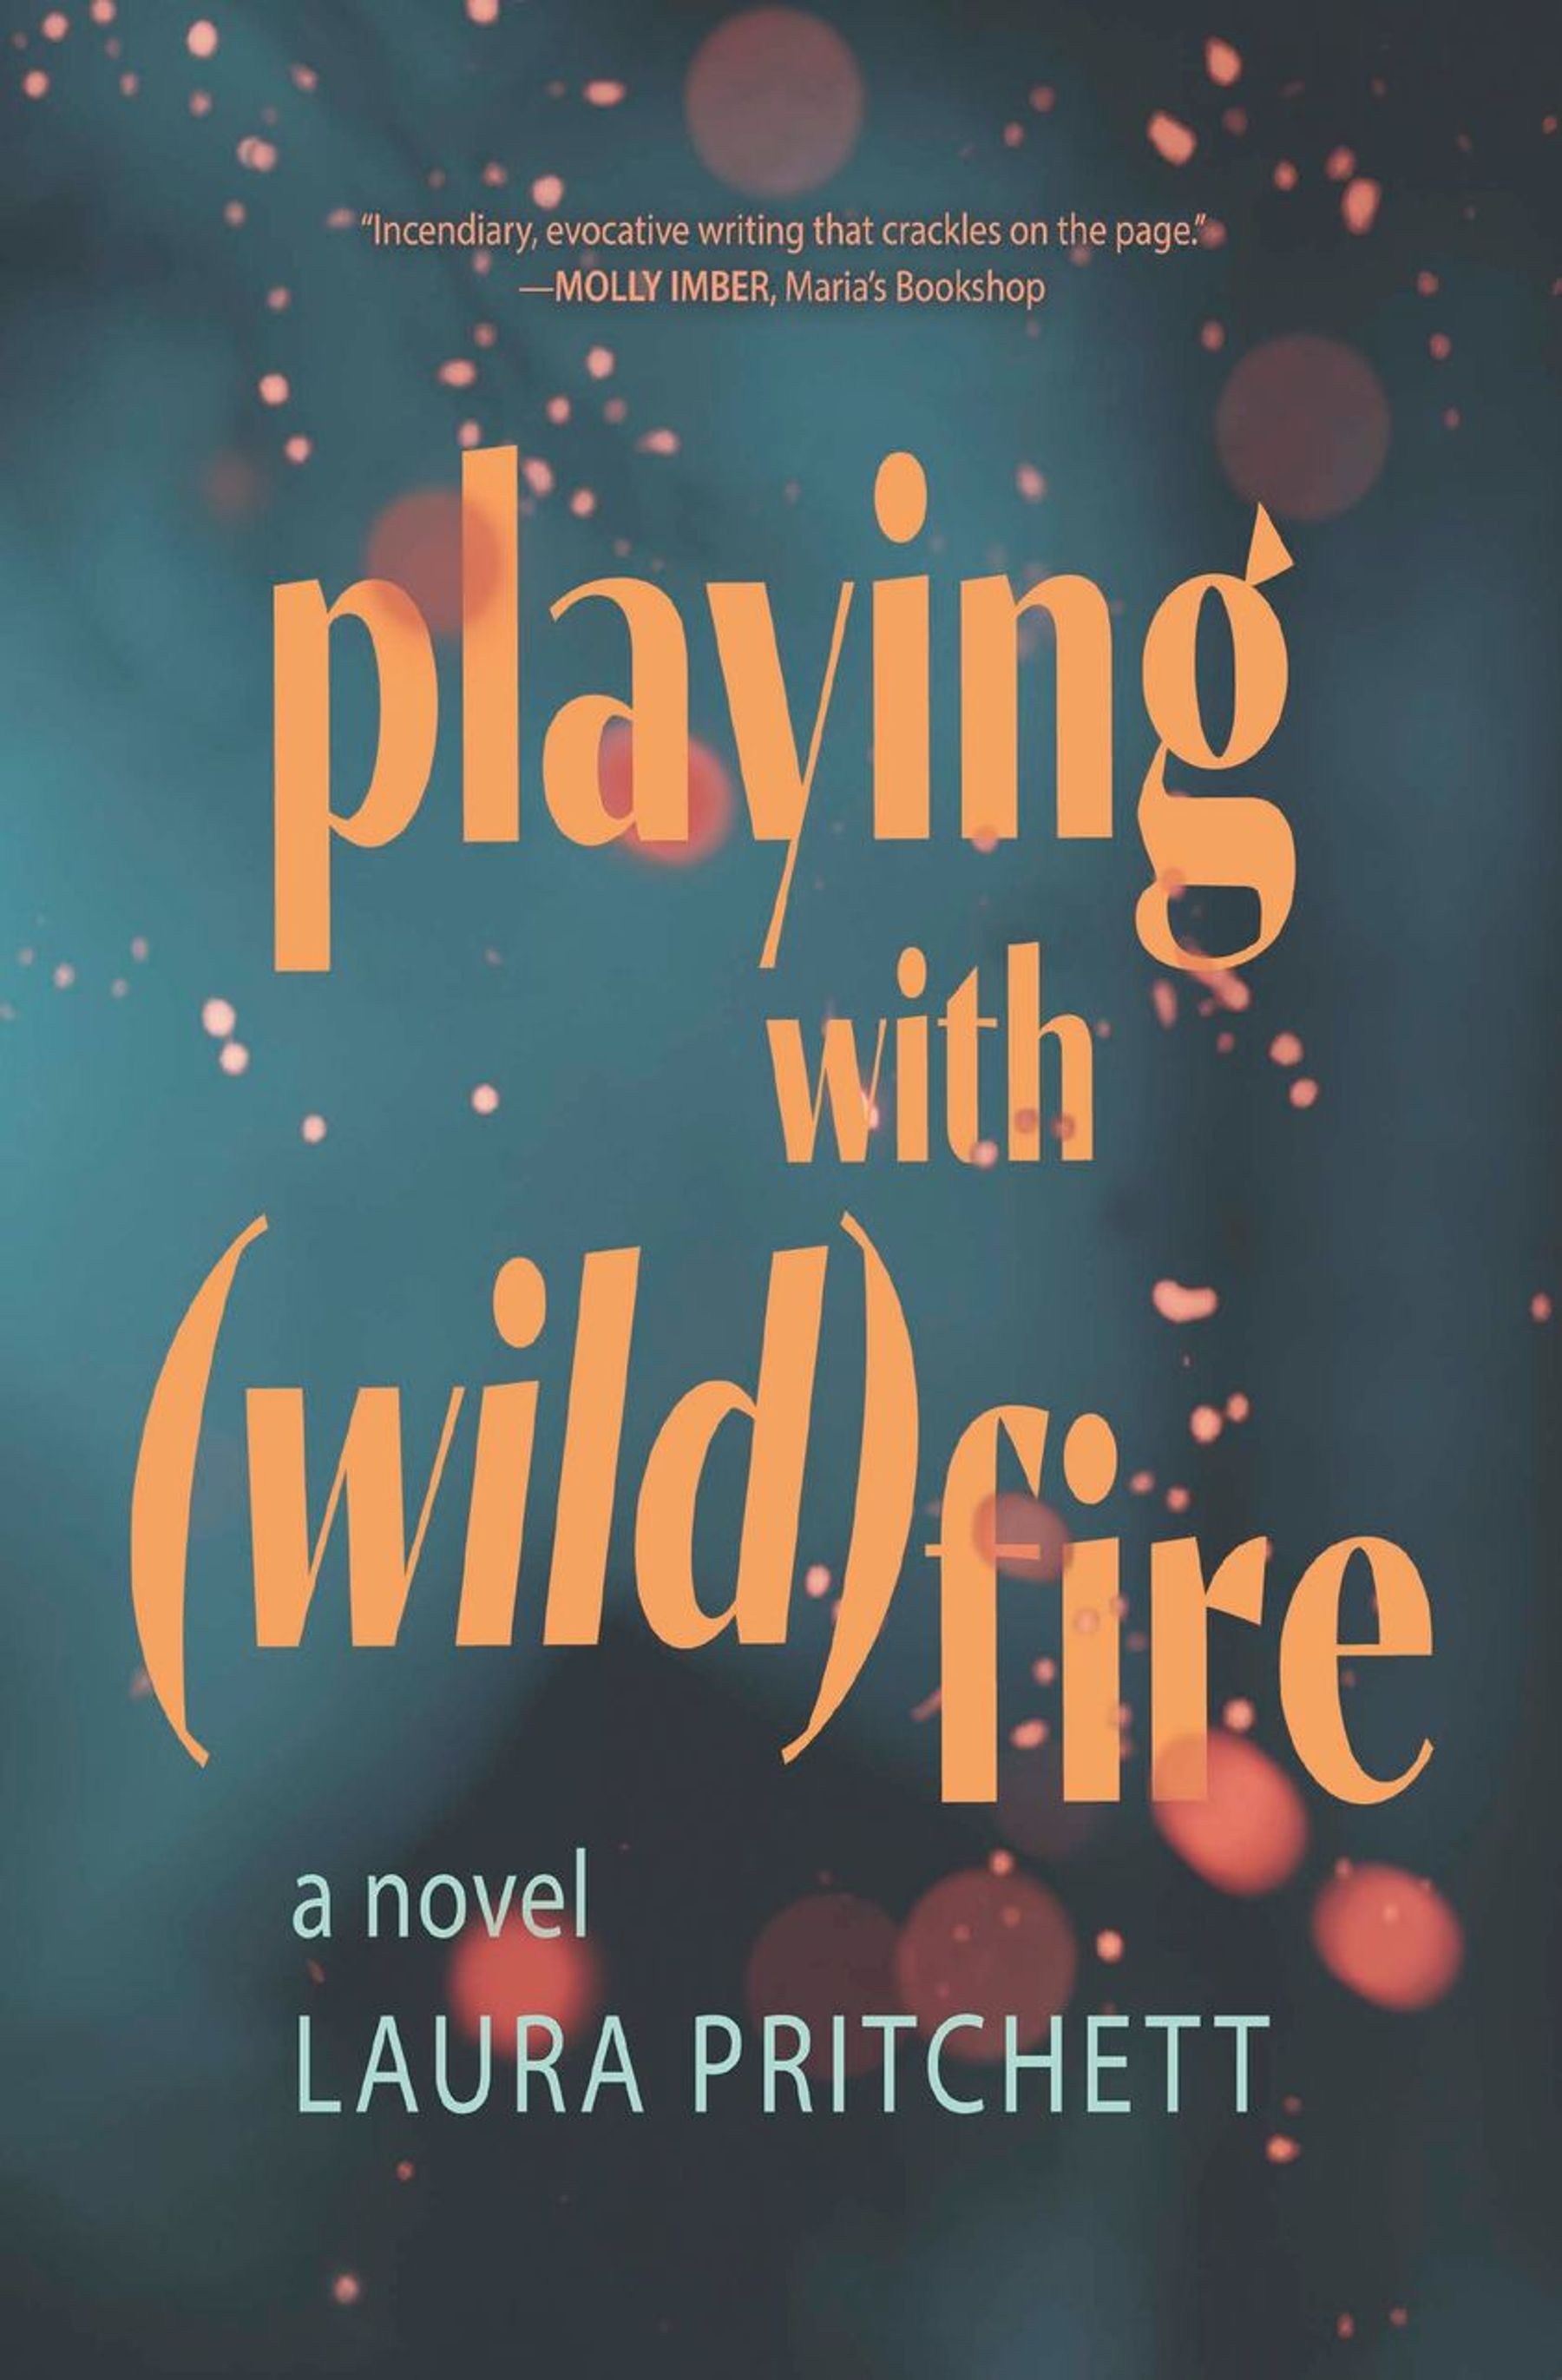 Laura Pritchett -- "Playing with Wildfire"